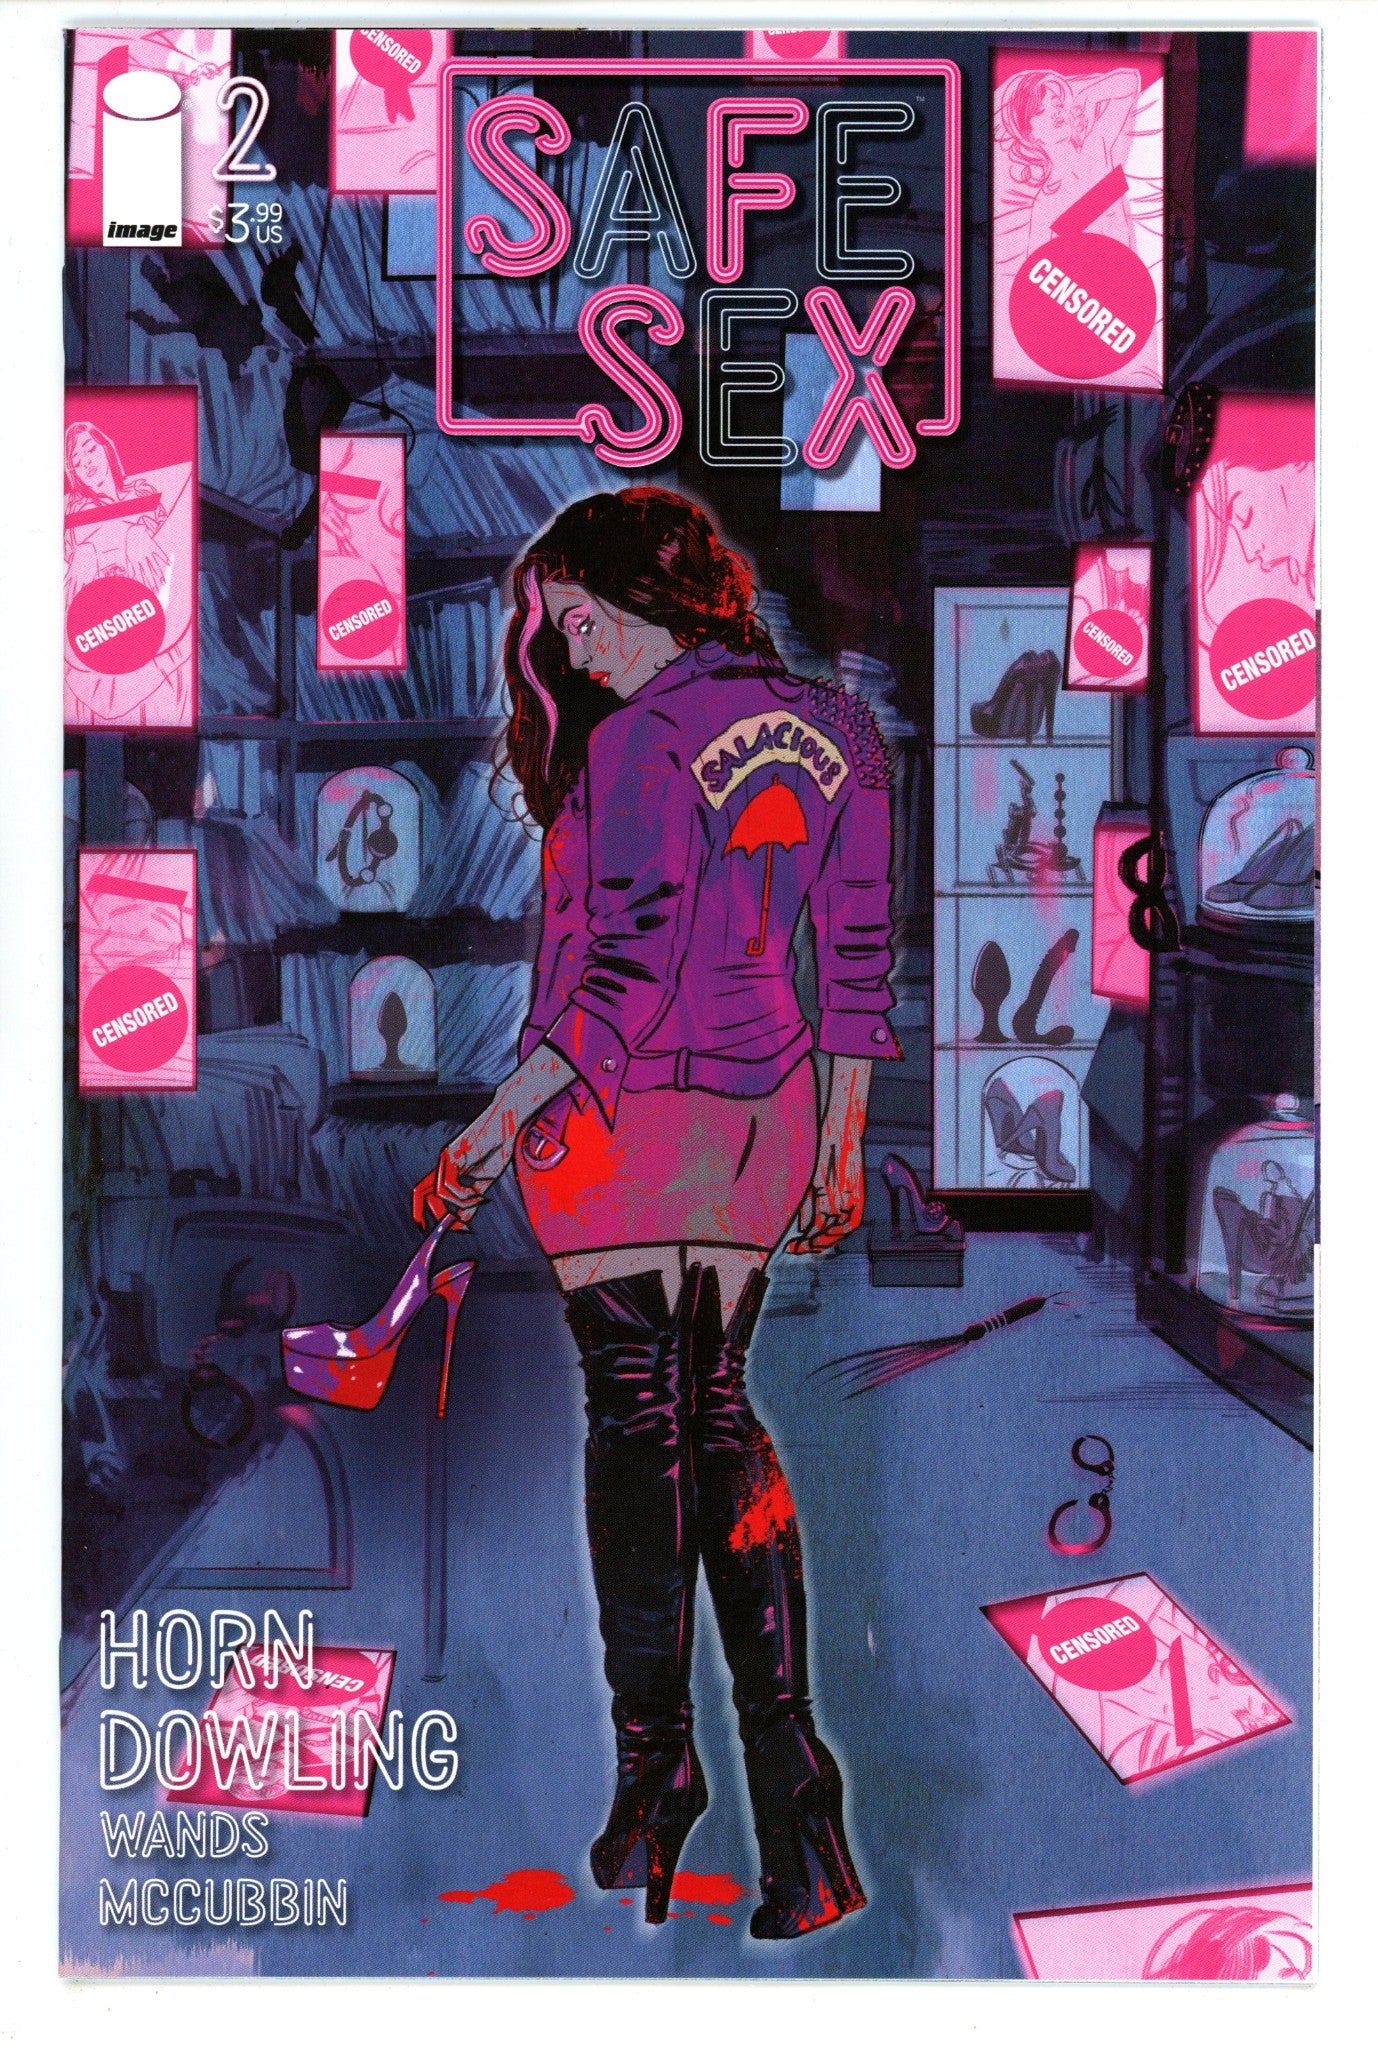 SFSX (Safe Sex) 2 High Grade (2019) 